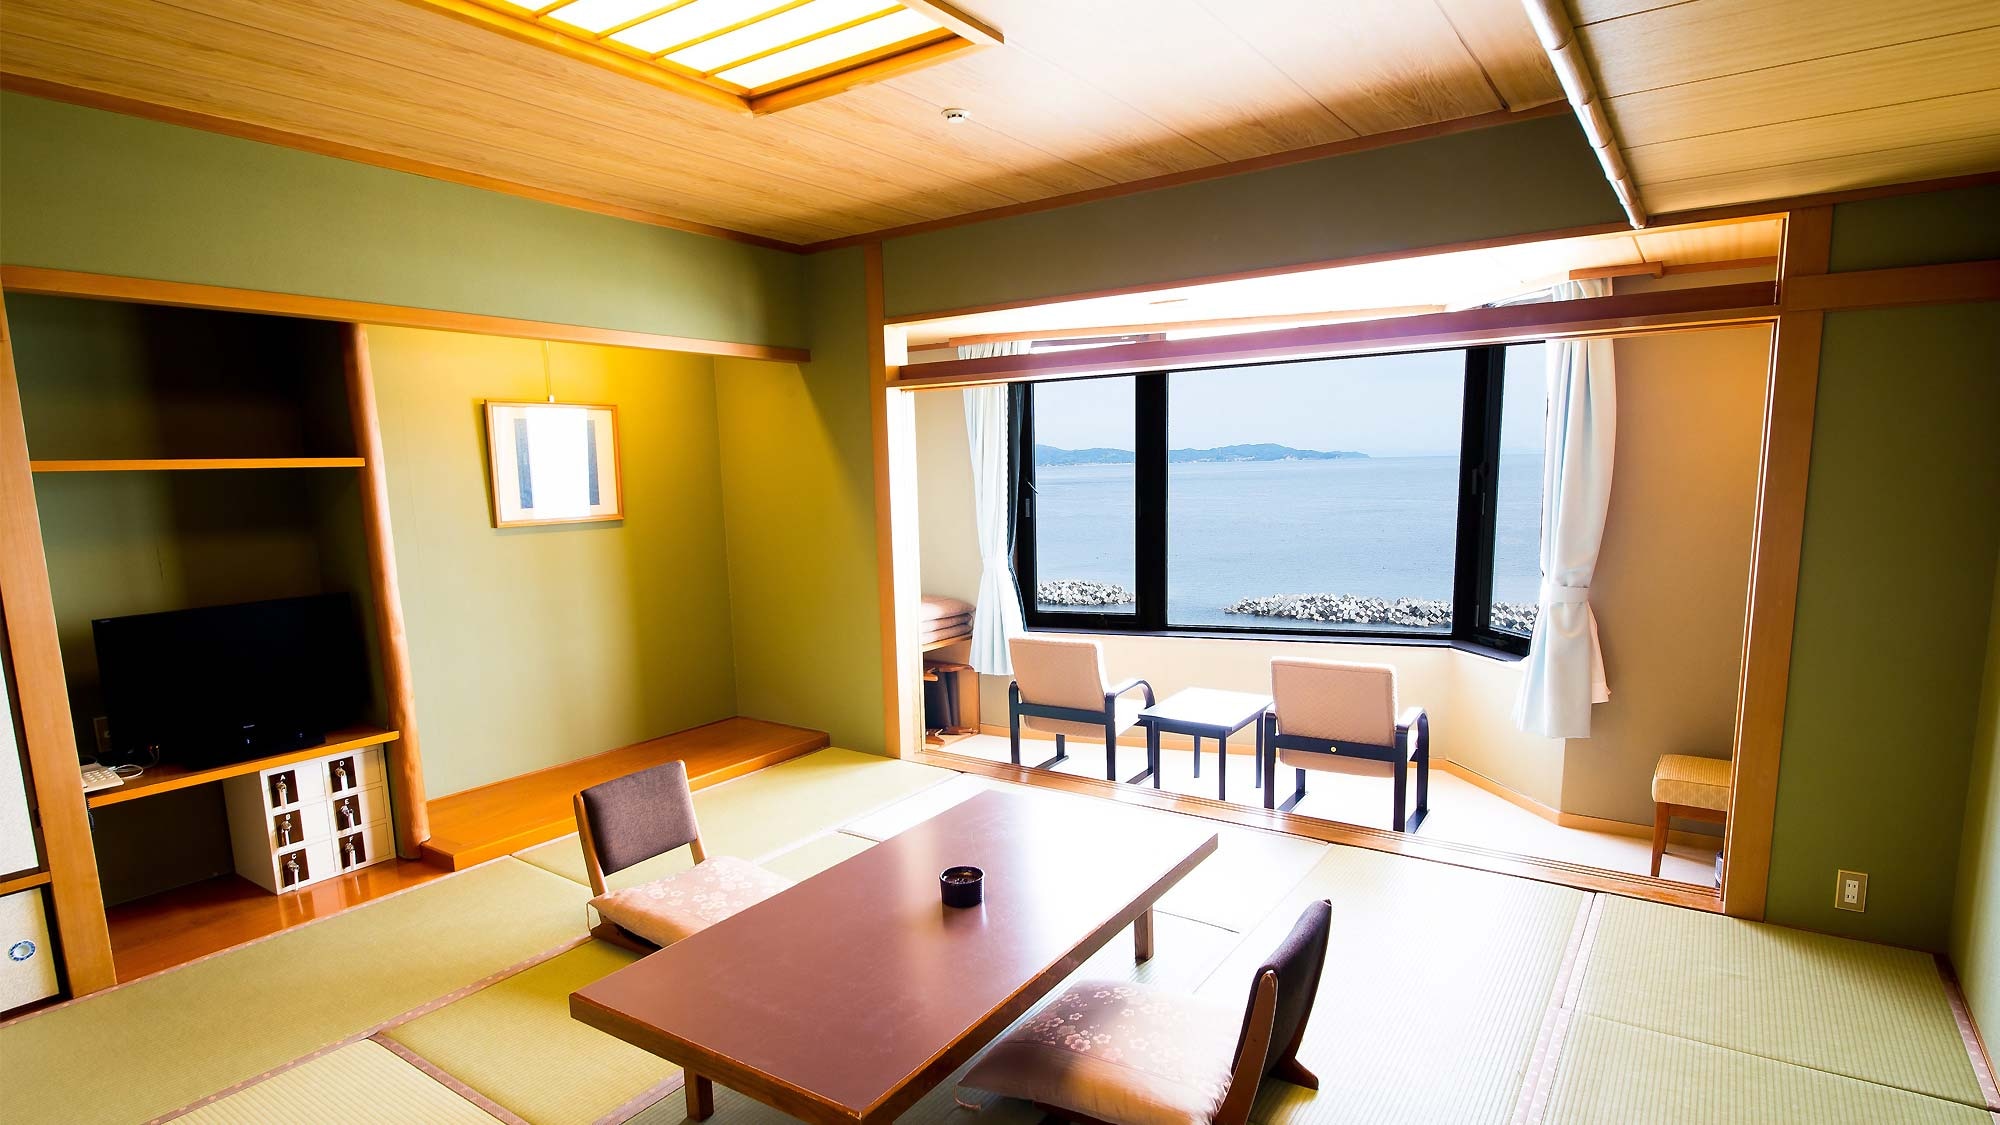 Ocean view Japanese-style room 12.5 tatami mats